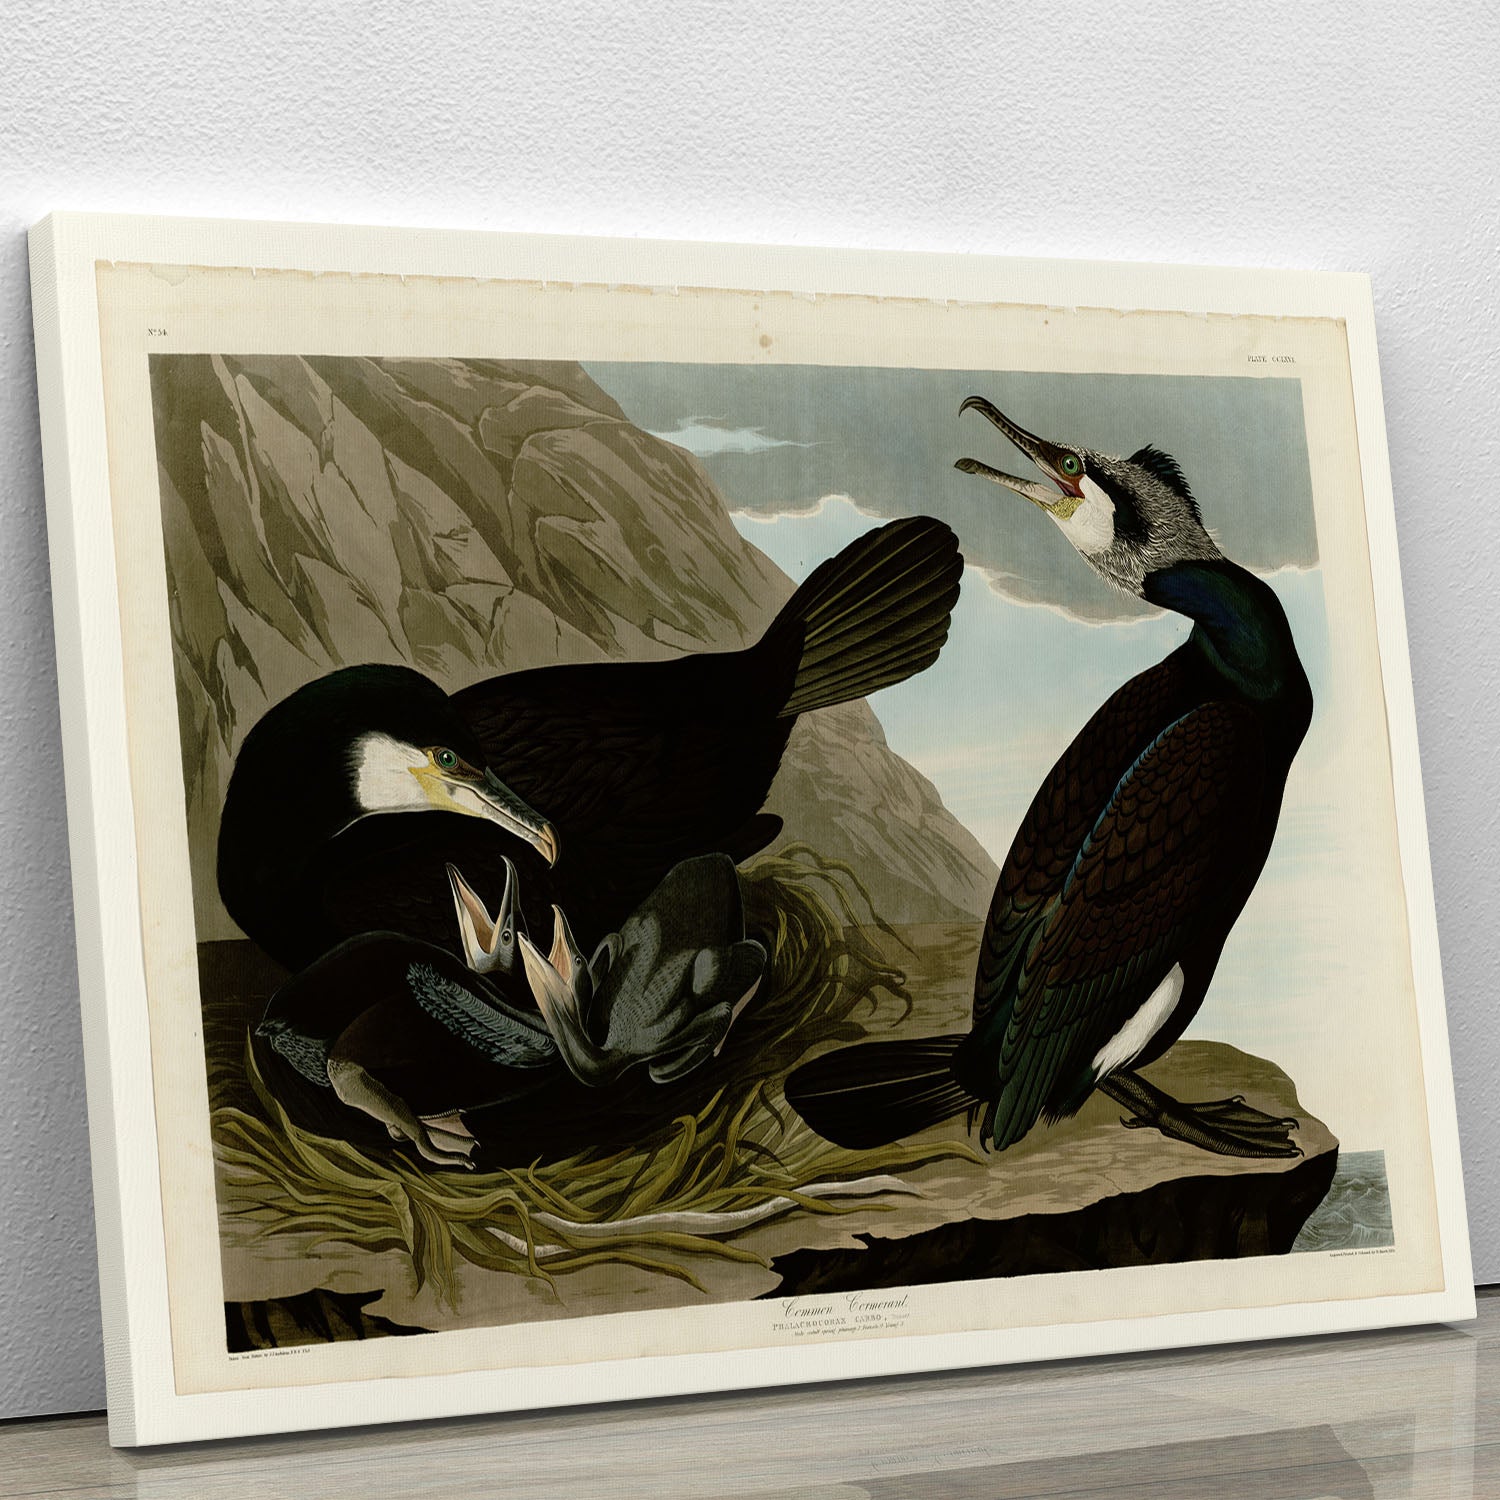 Common Cormorant by Audubon Canvas Print or Poster - Canvas Art Rocks - 1